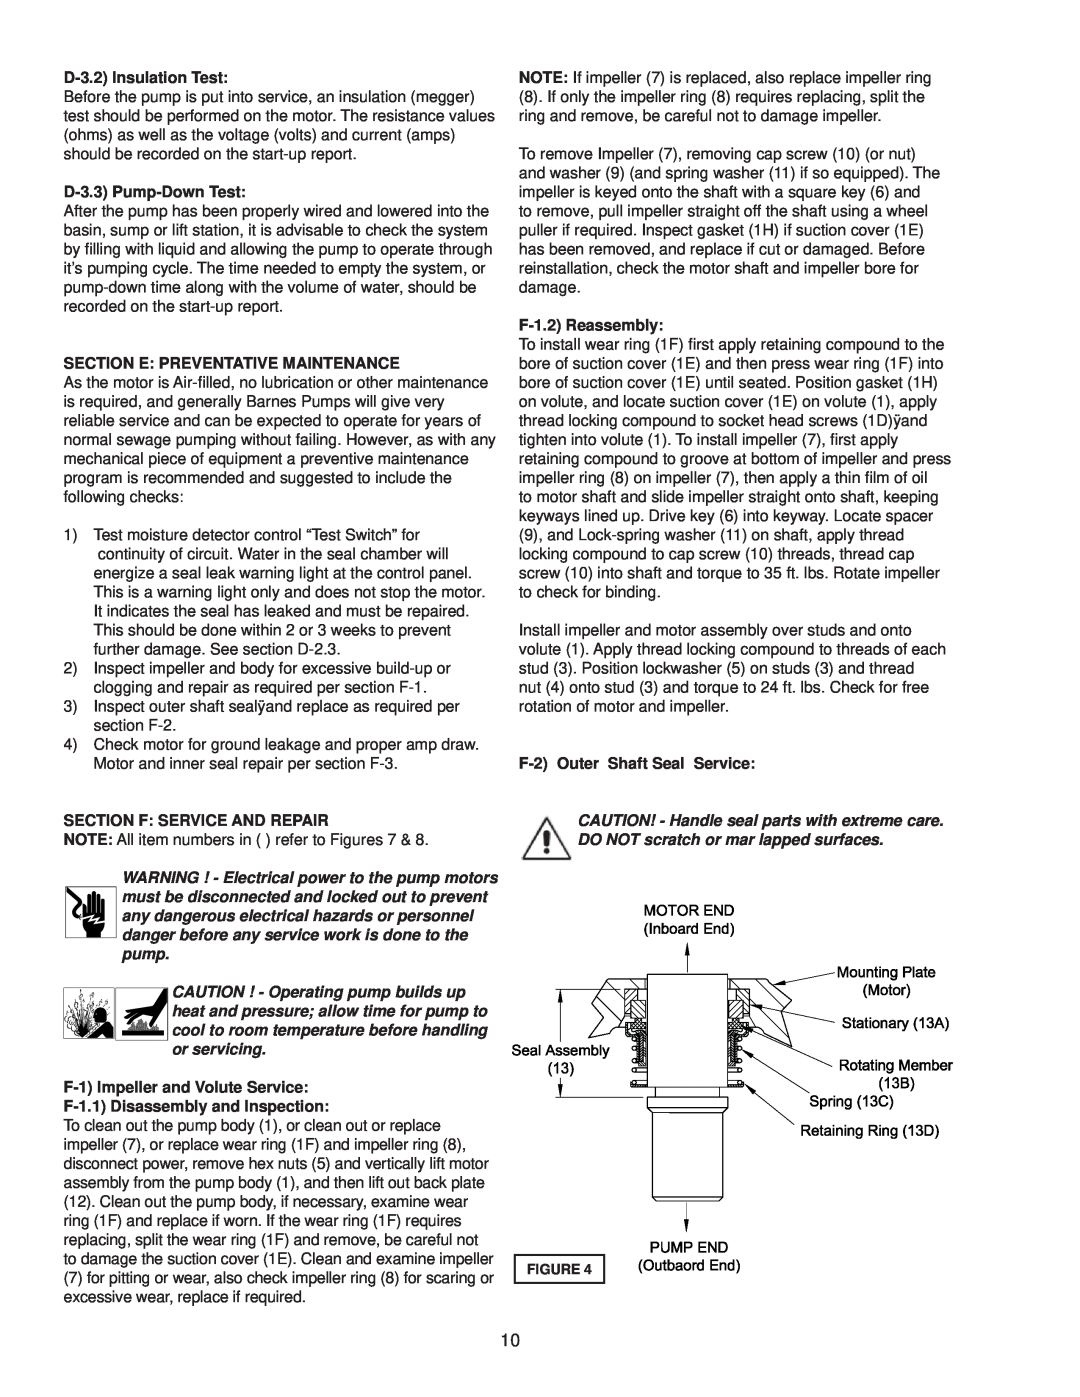 Crane Plumbing 8XSE-HA operation manual CAUTION ! - Operating pump builds up 